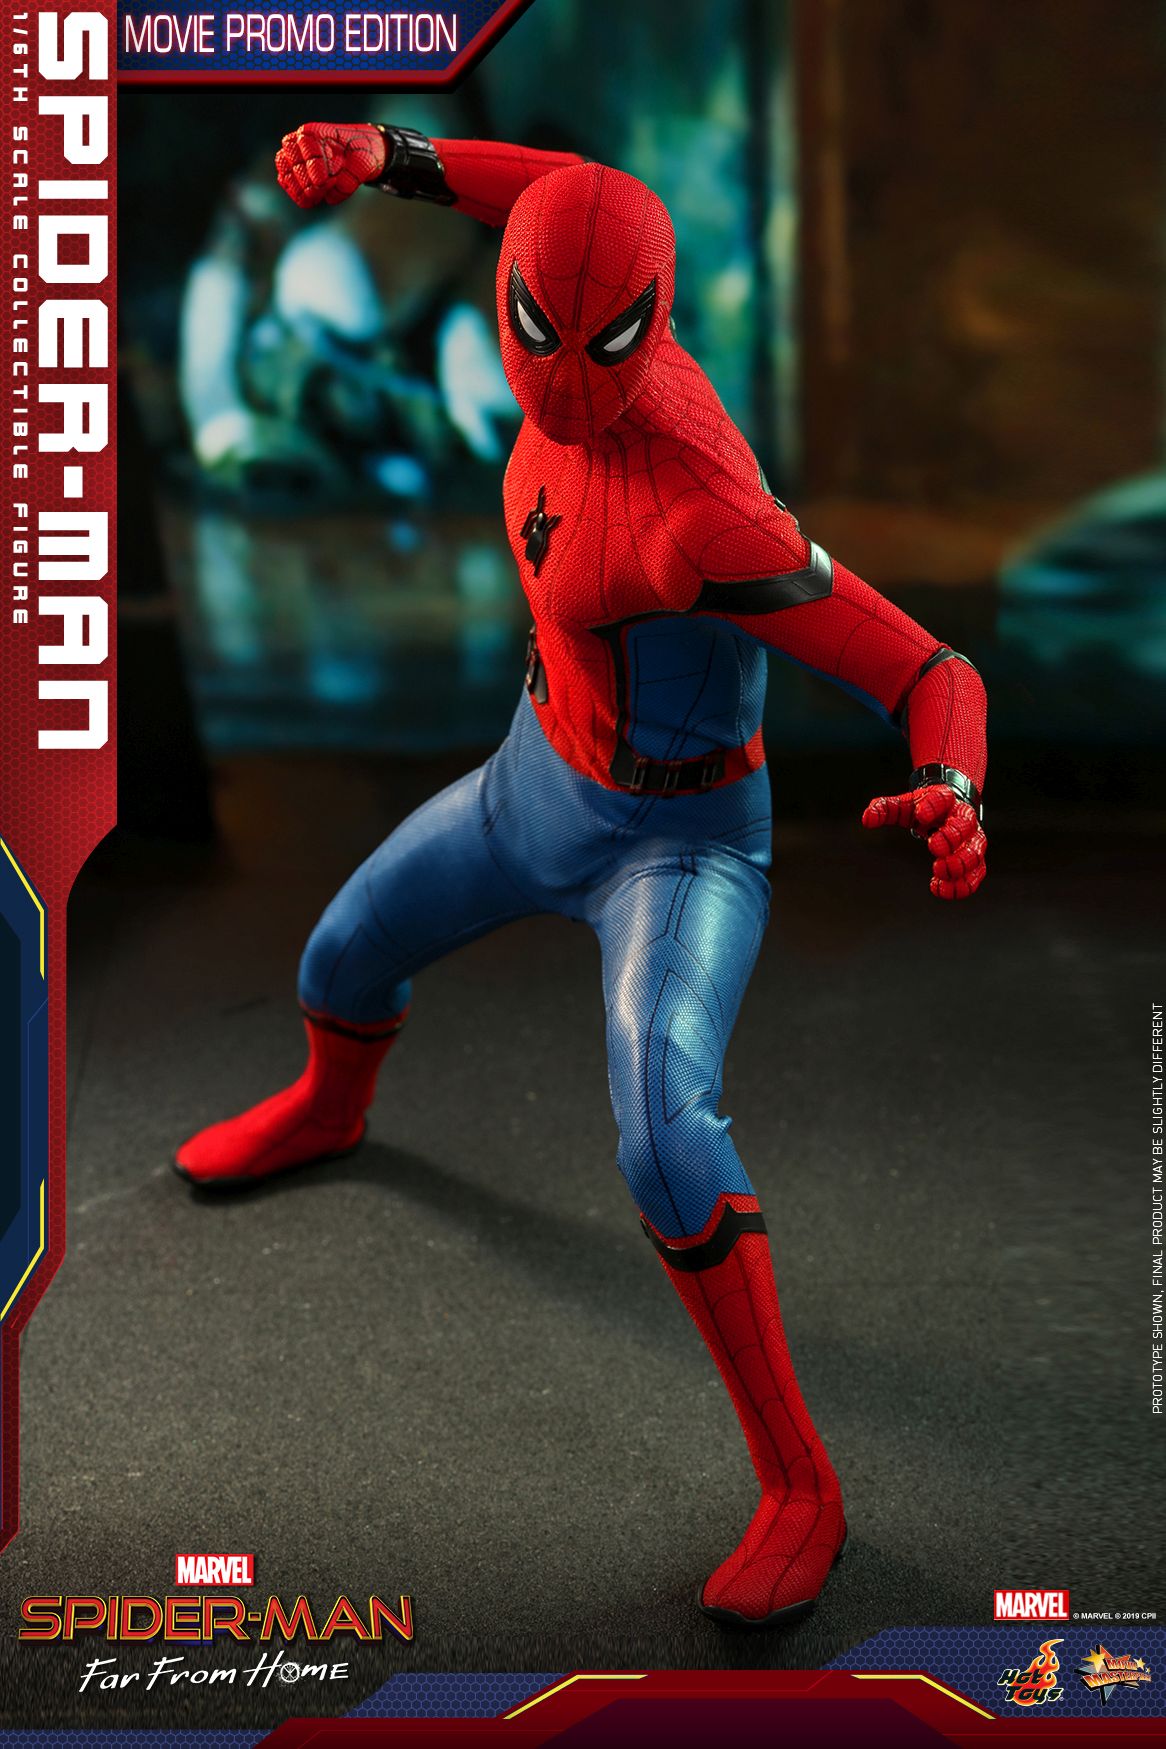 Hot Toys Smffh Spider Man Movie Promo Edition Collectible Figure_pr7